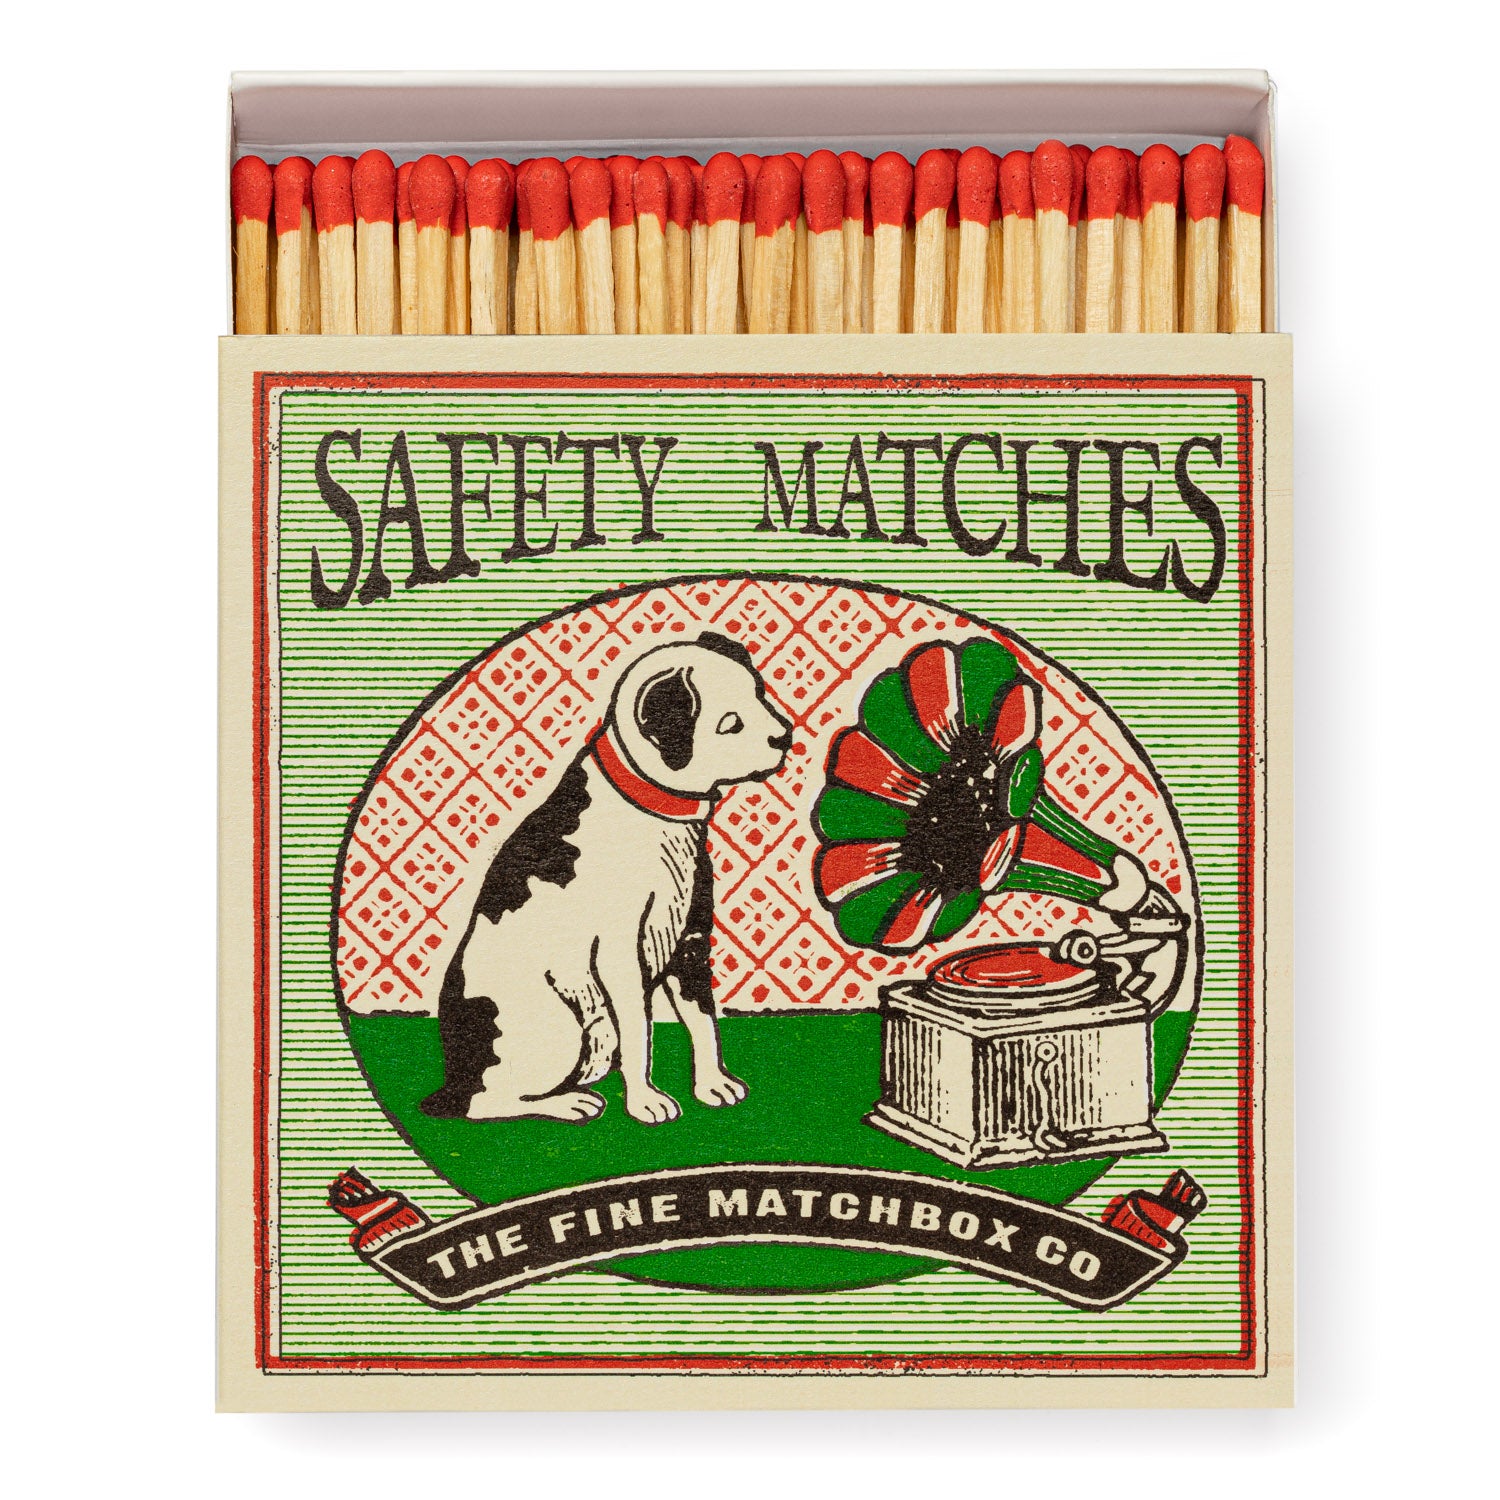 Dog and Gramaphone Luxury Matches – 100 Stick Matches